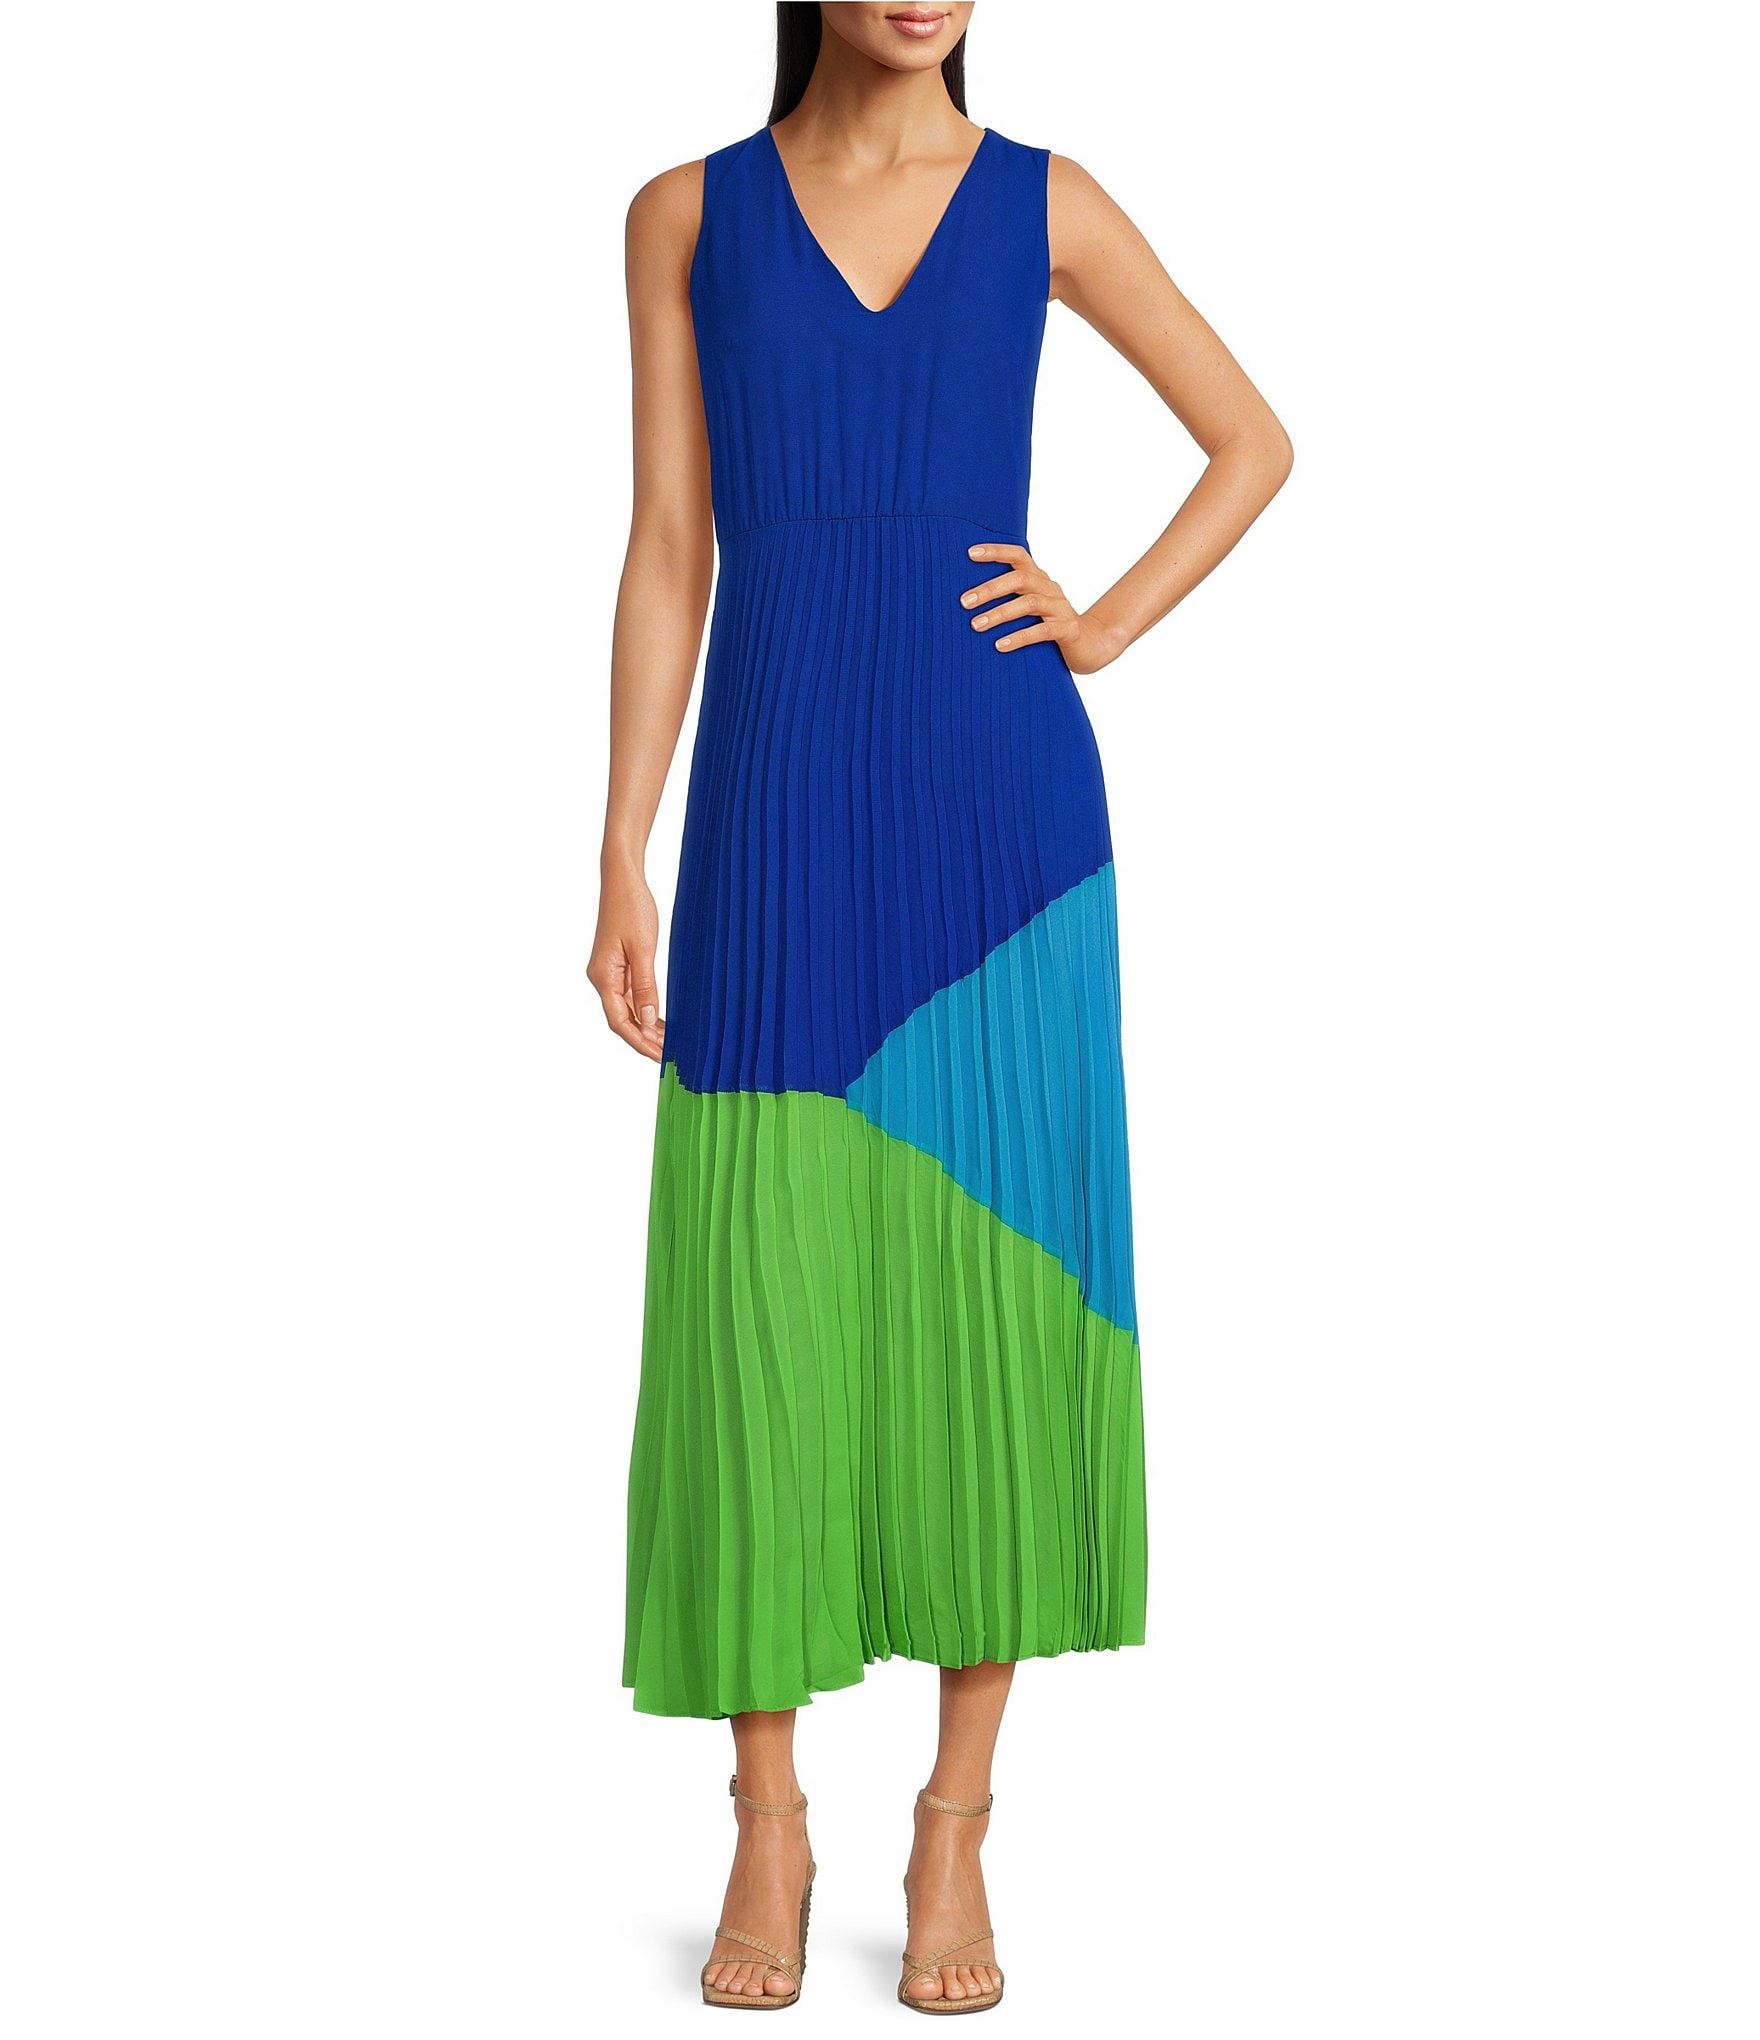 DKNY Color Block Dress - Burda 6851 (OOP) – Anita by Design